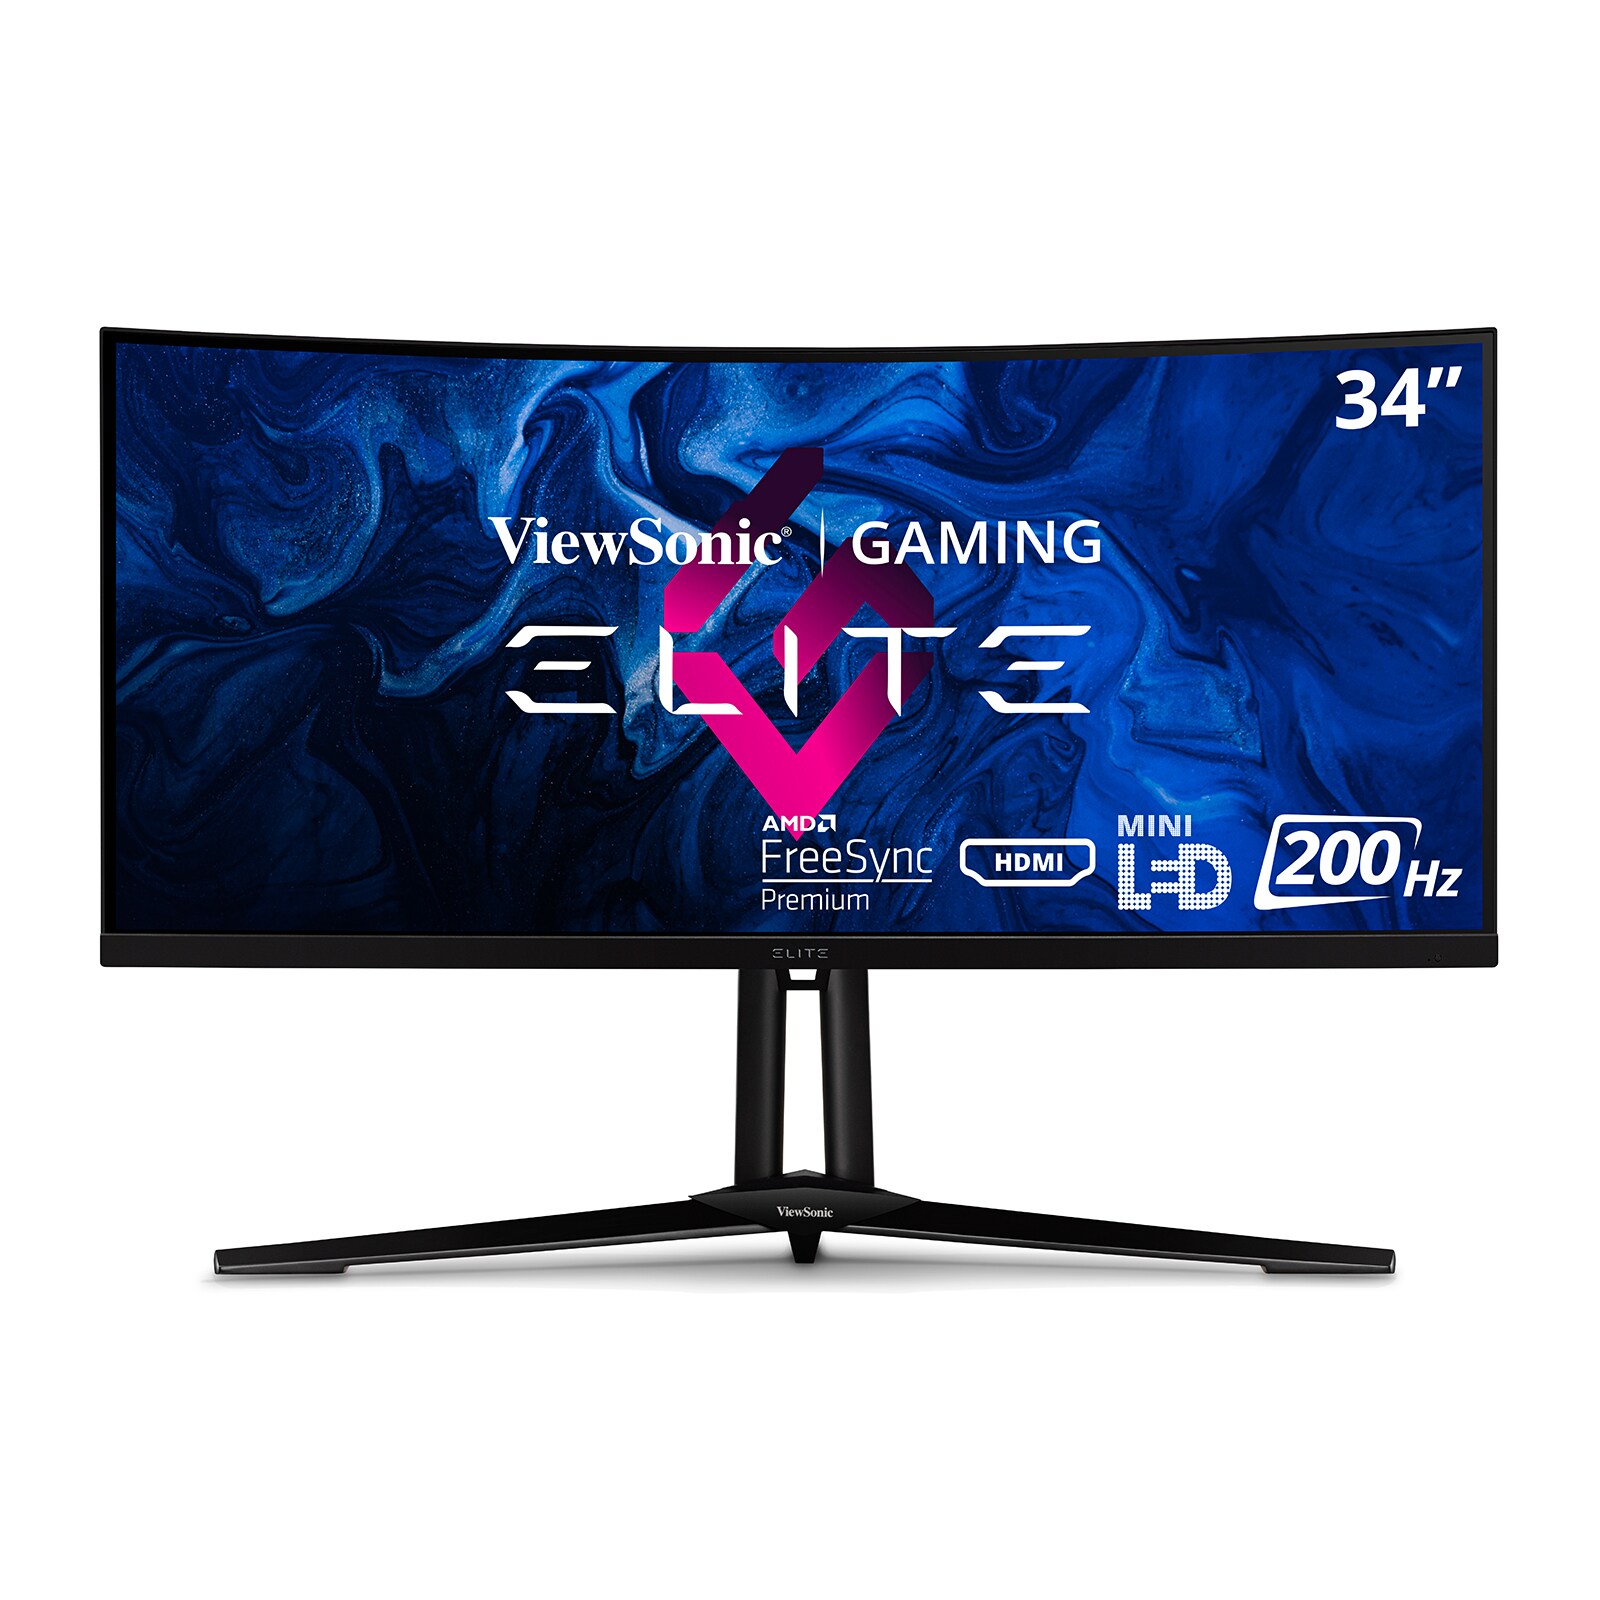 ViewSonic ELITE XG341C-2K - 1440p Curved Gaming Monitor with 1ms, 200Hz, Mini LED, HDMI 2.1, USB-C - 720 cd/m² - 34"